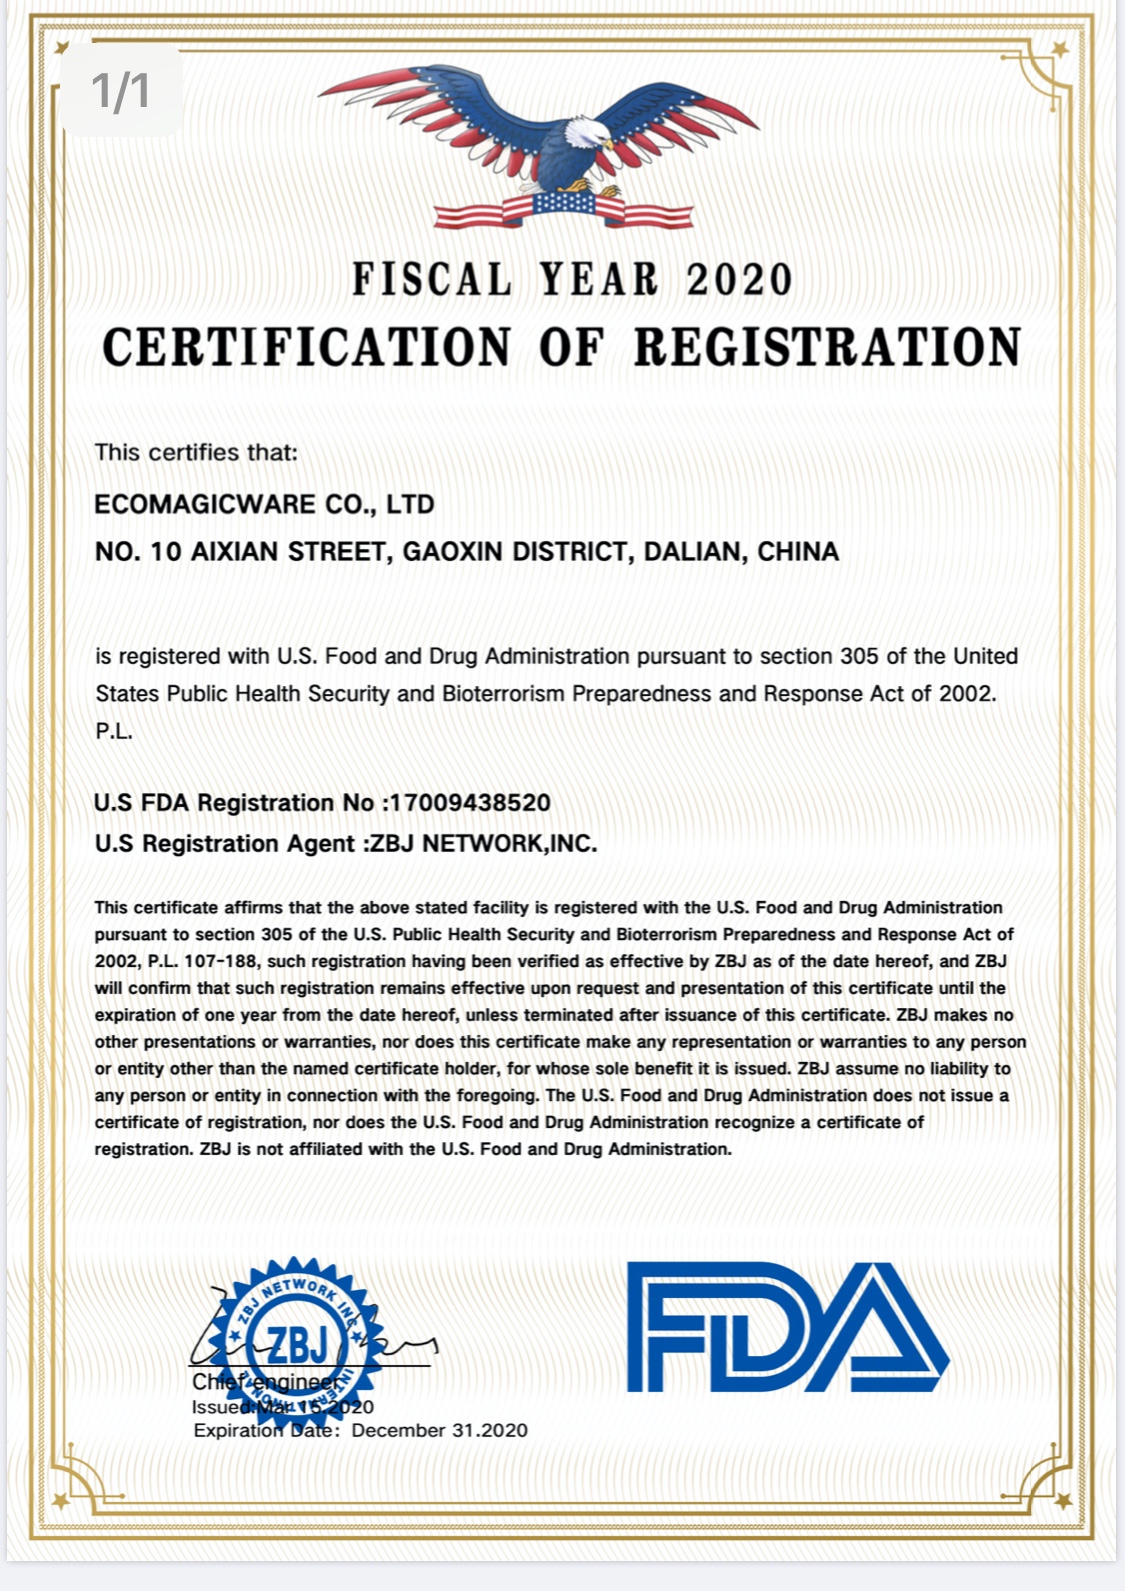 Ecomagicware got FDA certificate